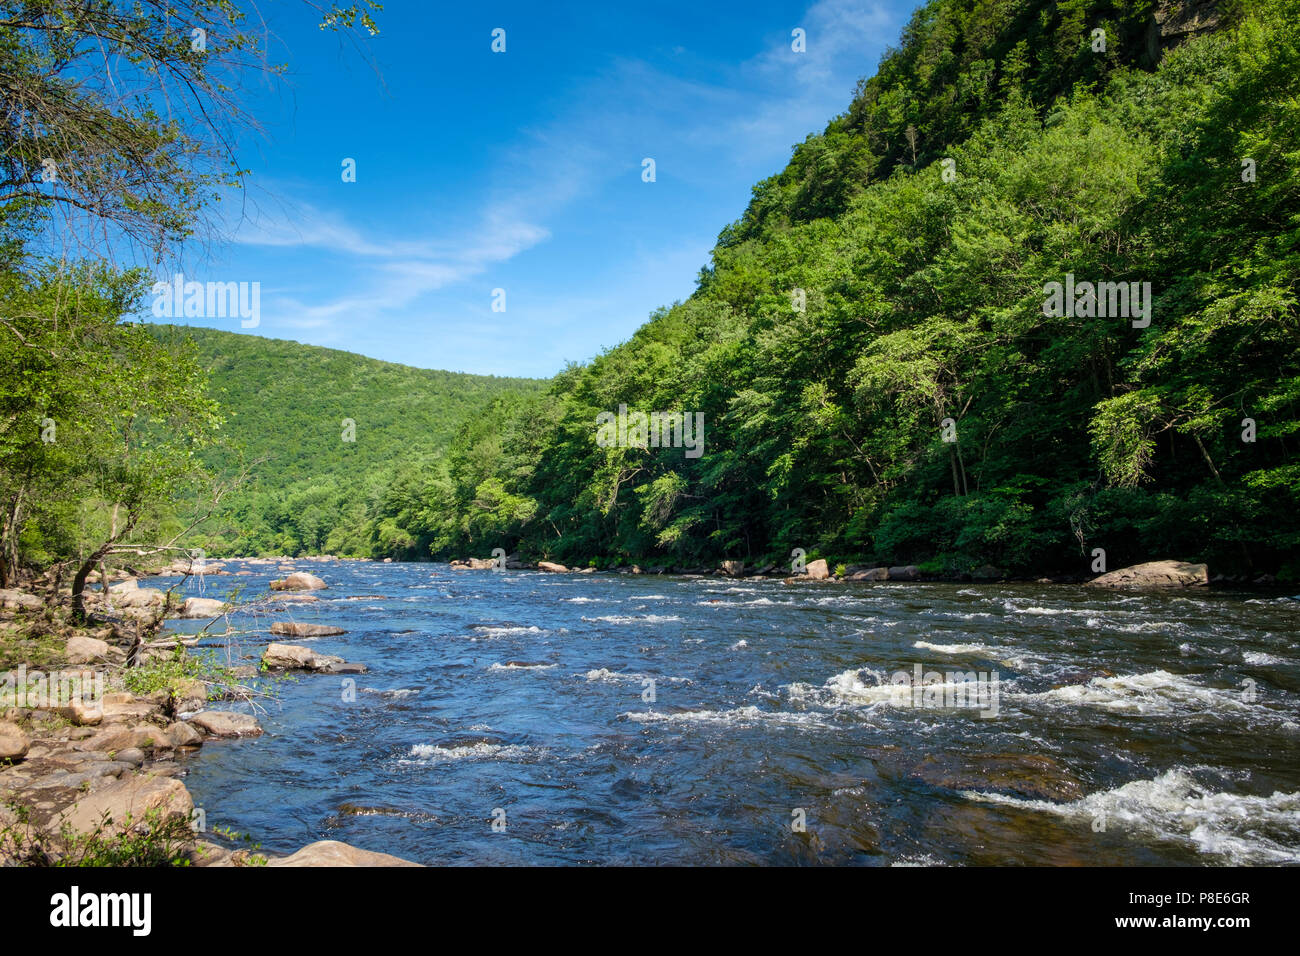 Lehigh Gorge State Park landscape with River in Poconos Mountains, near Jum Thorpe,Pennsylvania, USA Stock Photo